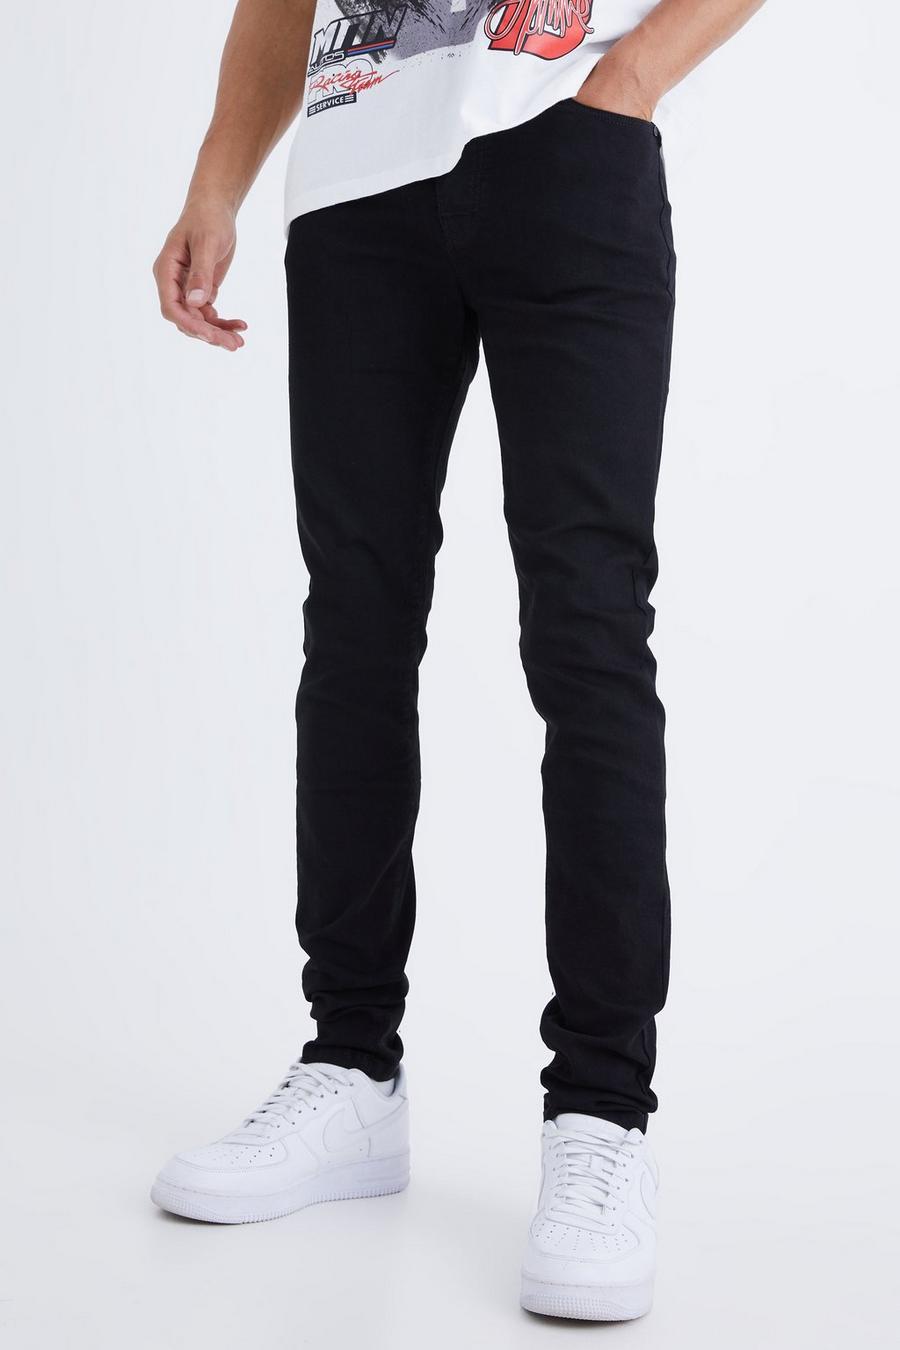 Jeans Tall Skinny Fit in Stretch, True black